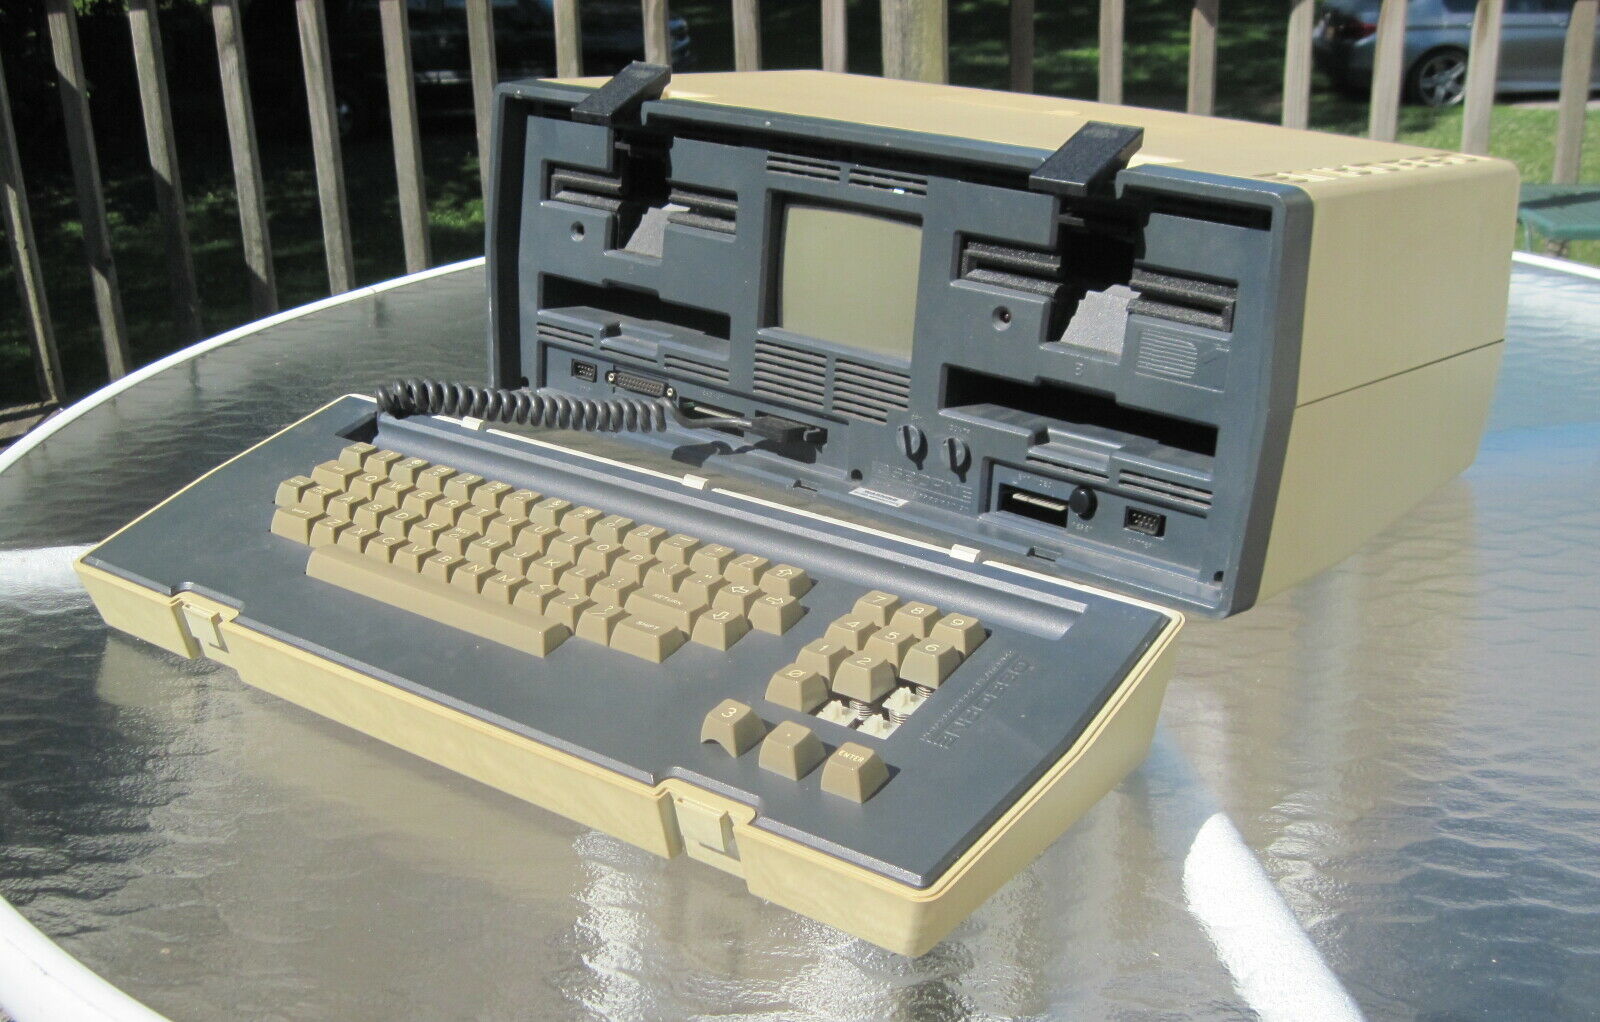 vintage-1982-osborne-1-computer-with-box-accessories